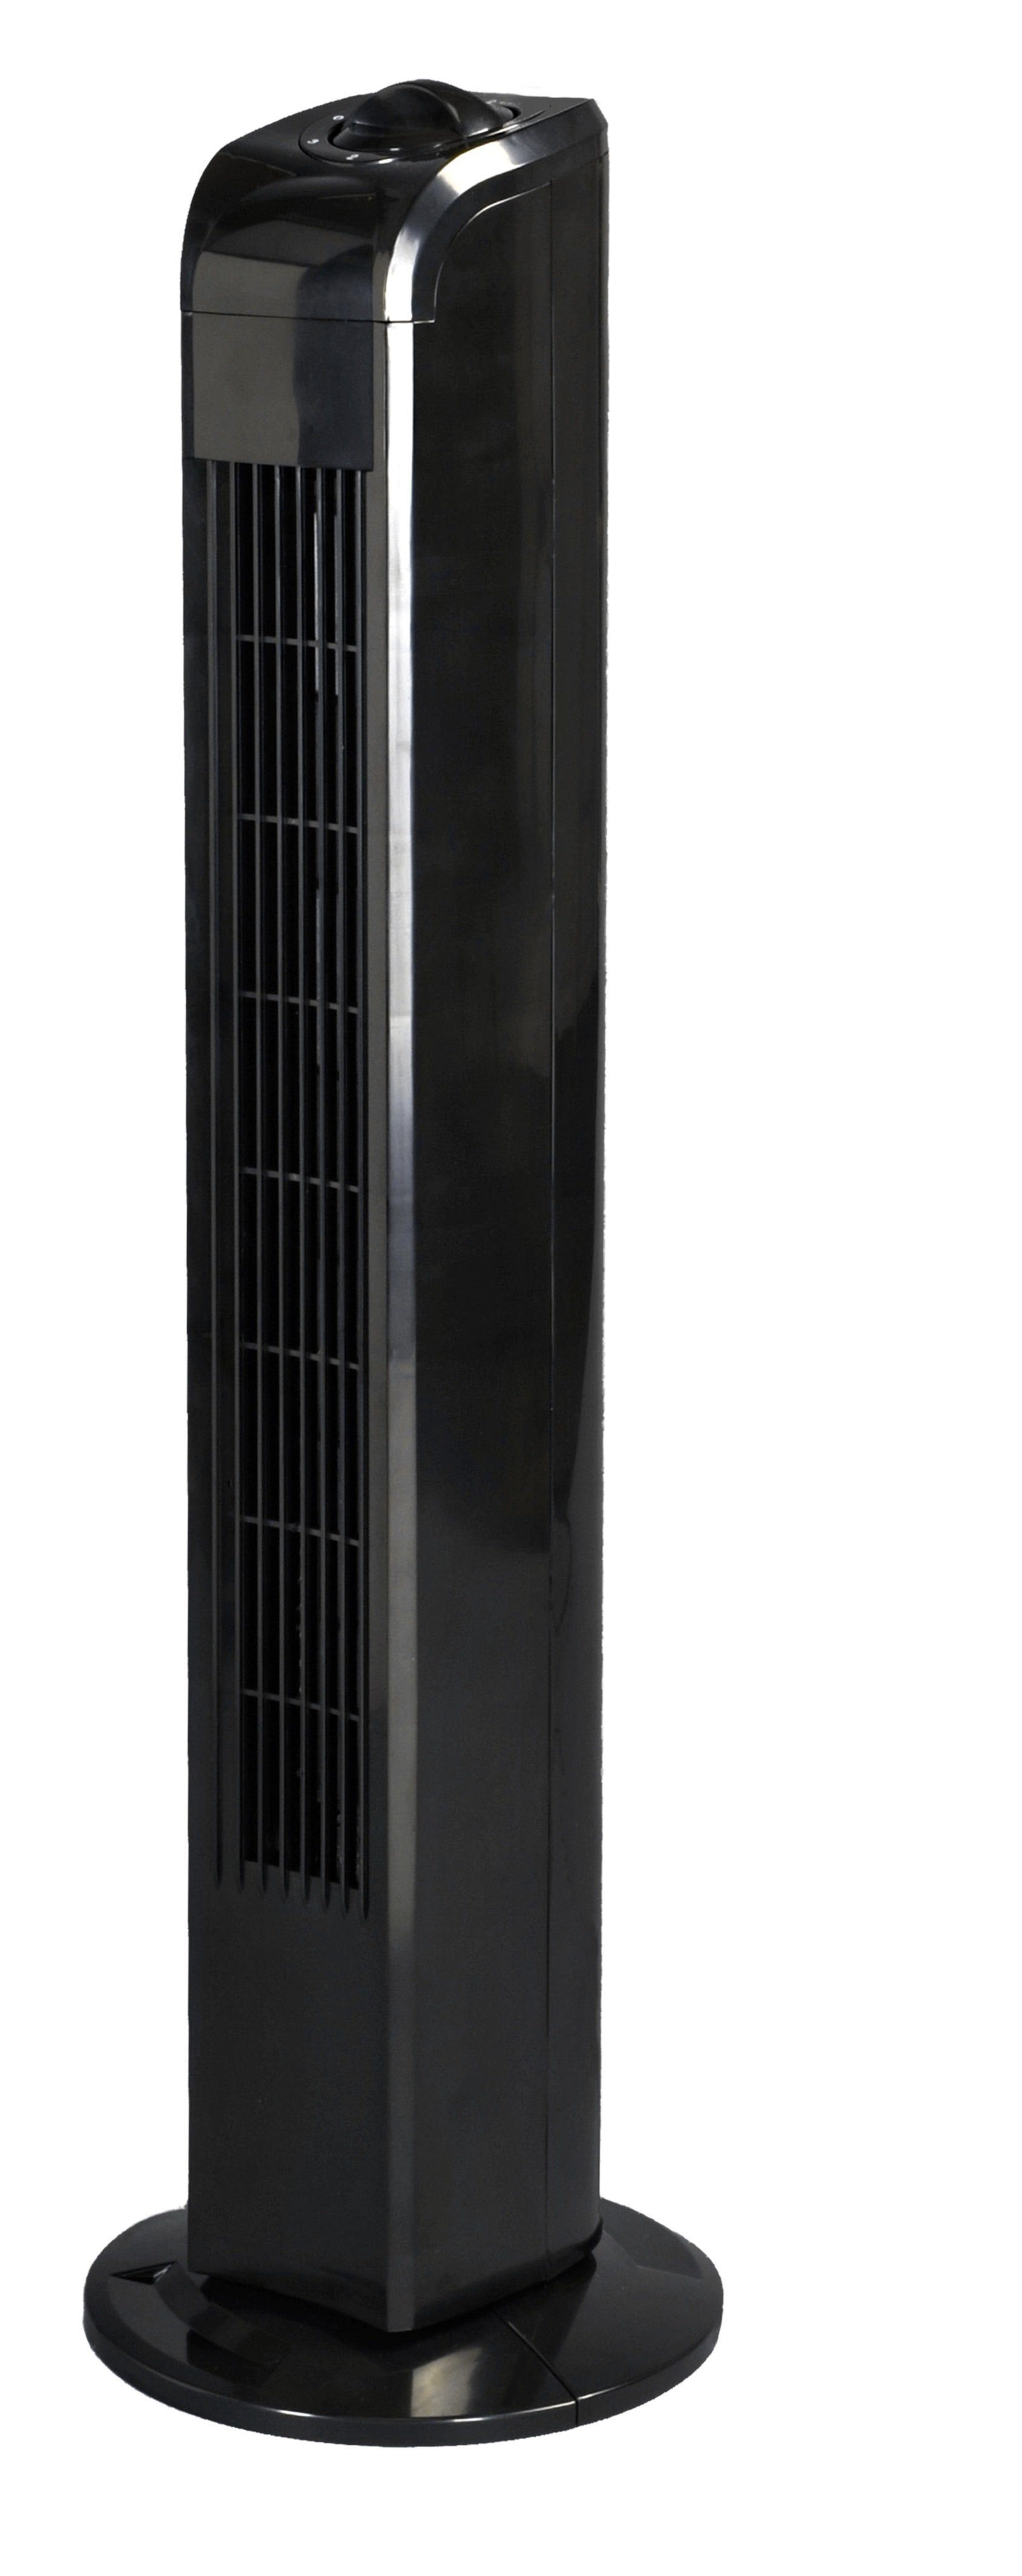 JUNG Turmventilator TVE22 Ventilator 76cm Turmventilator Вентиляторы, 75° Oszillation, Standventilator, 50W Turmlüfter, bis 40m², leise, Вентиляторы